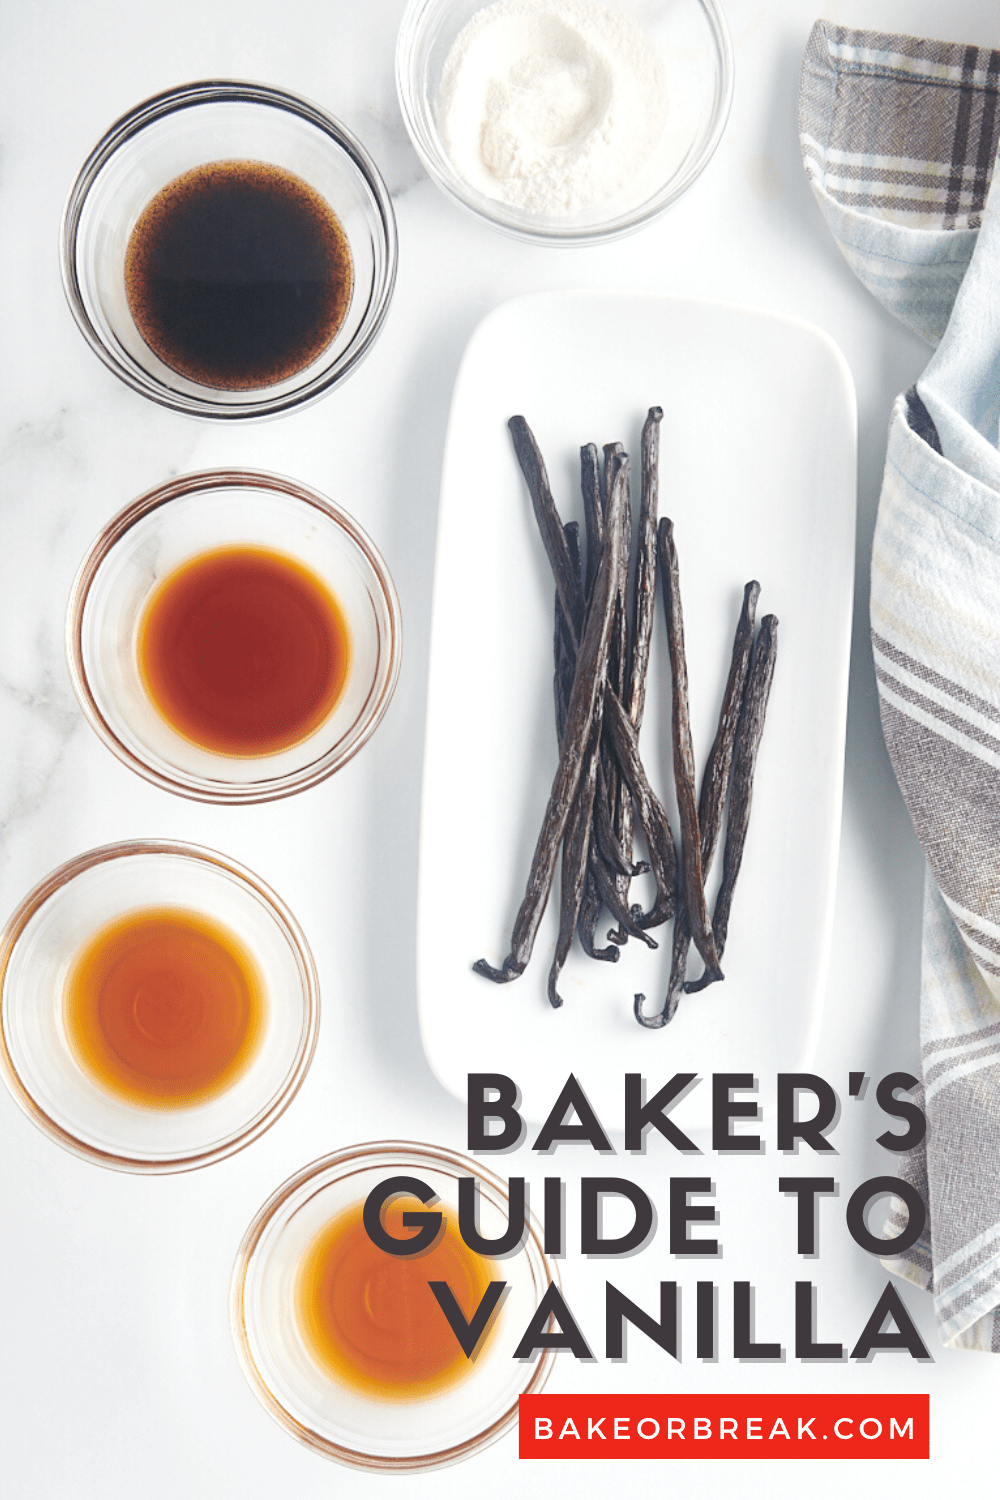 Bagerens guide til Vanilla bakeorbreak.com